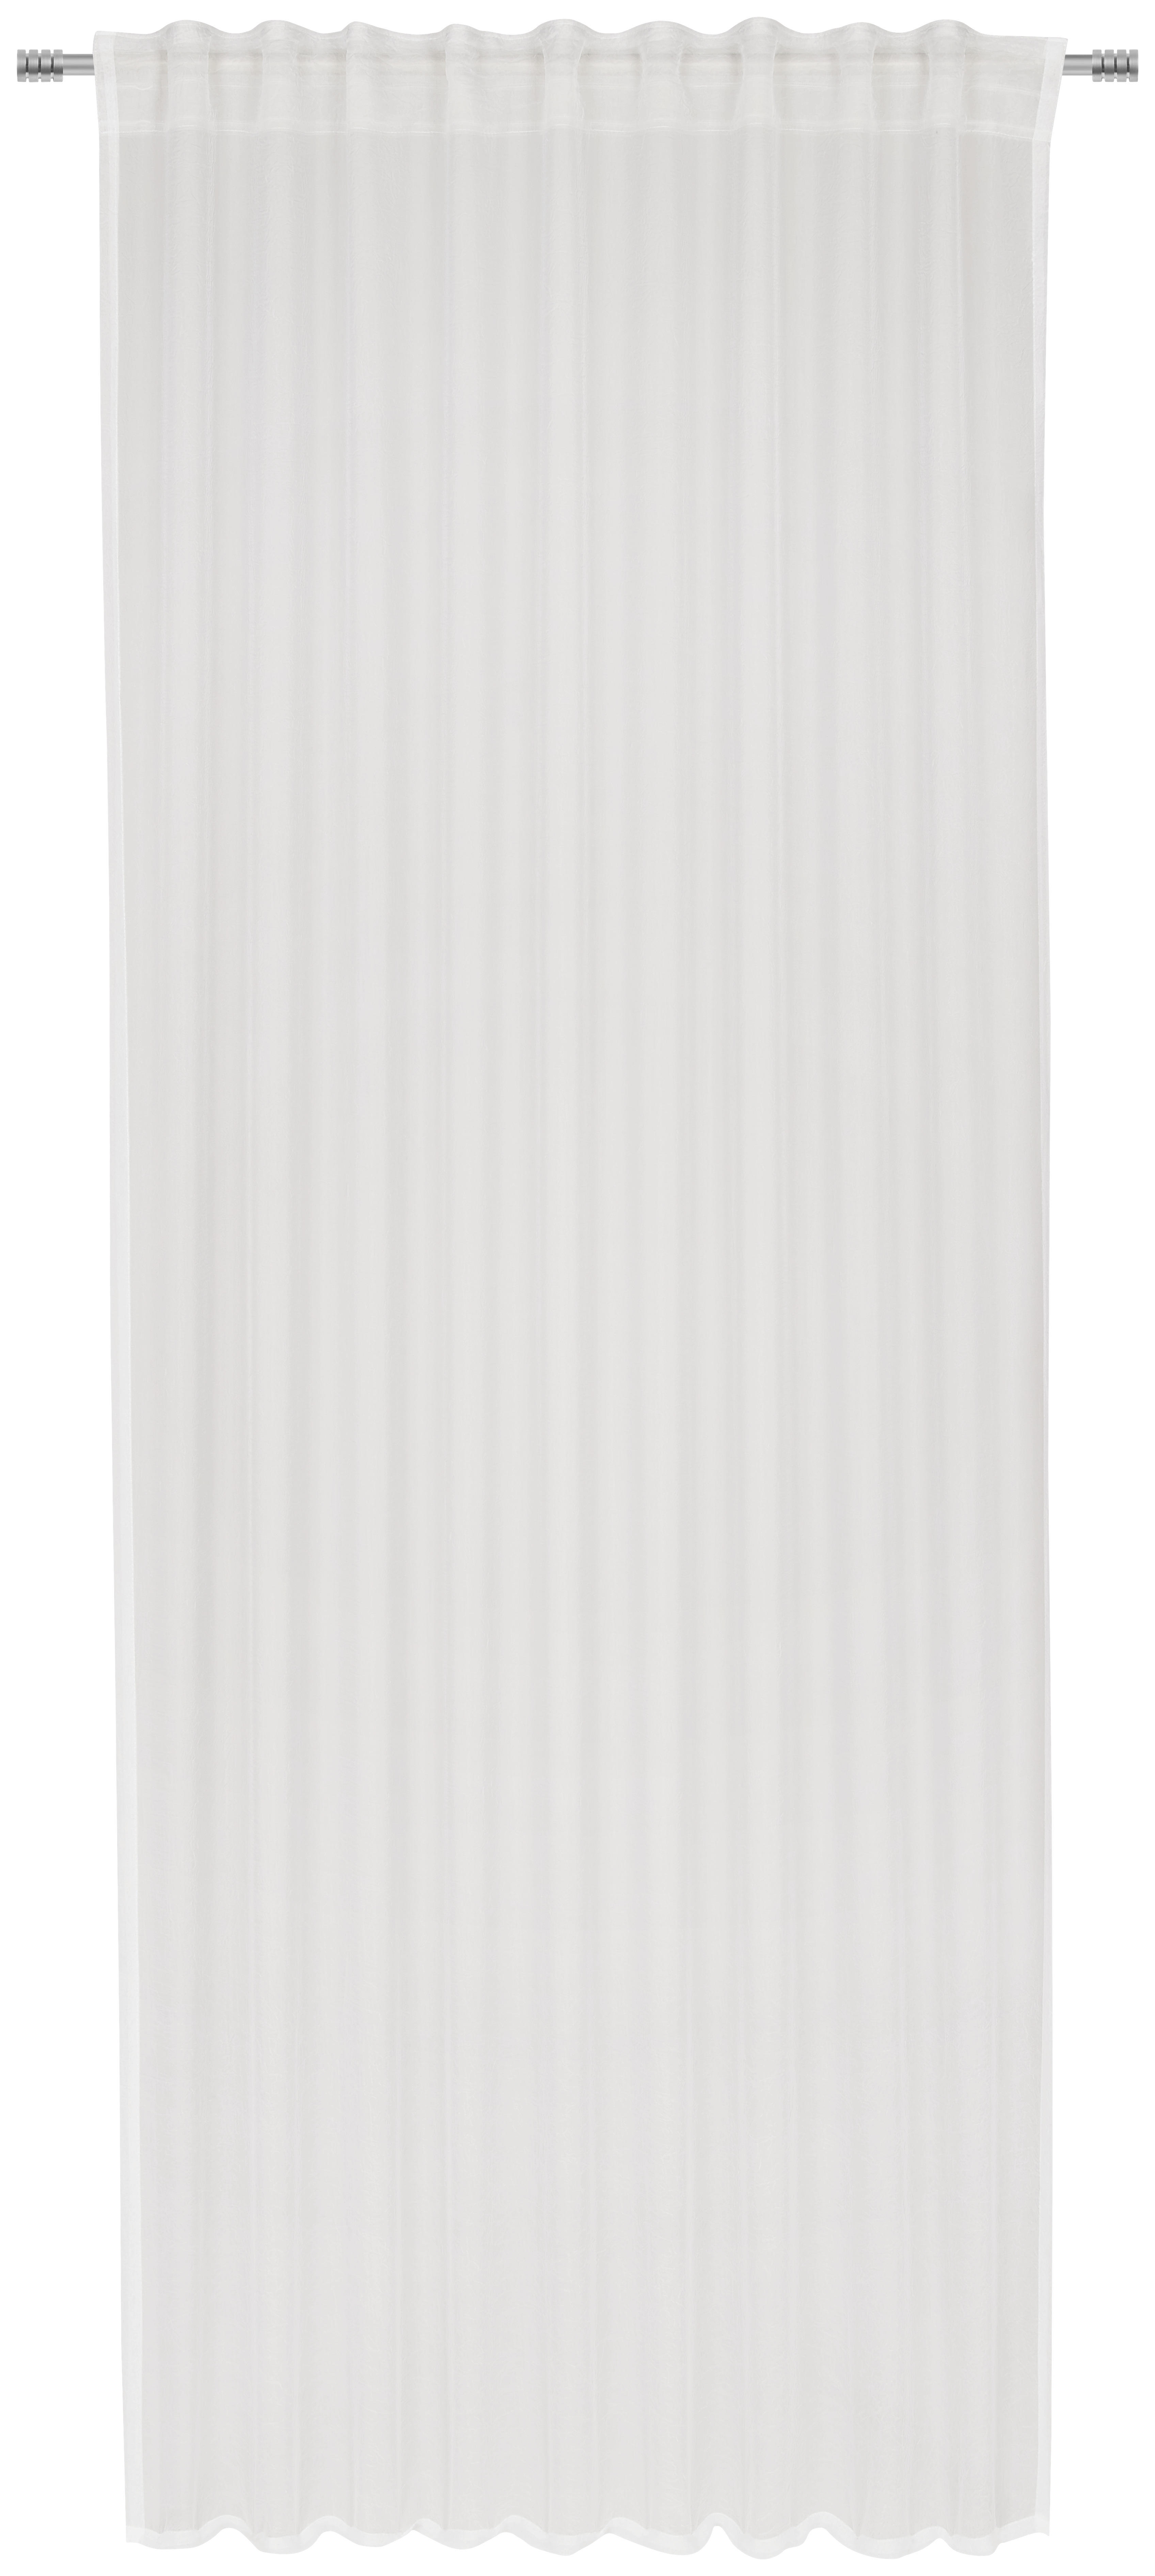 FERTIGVORHANG MALBOROUGH transparent 135/245 cm   - Weiß, Basics, Textil (135/245cm) - Esposa